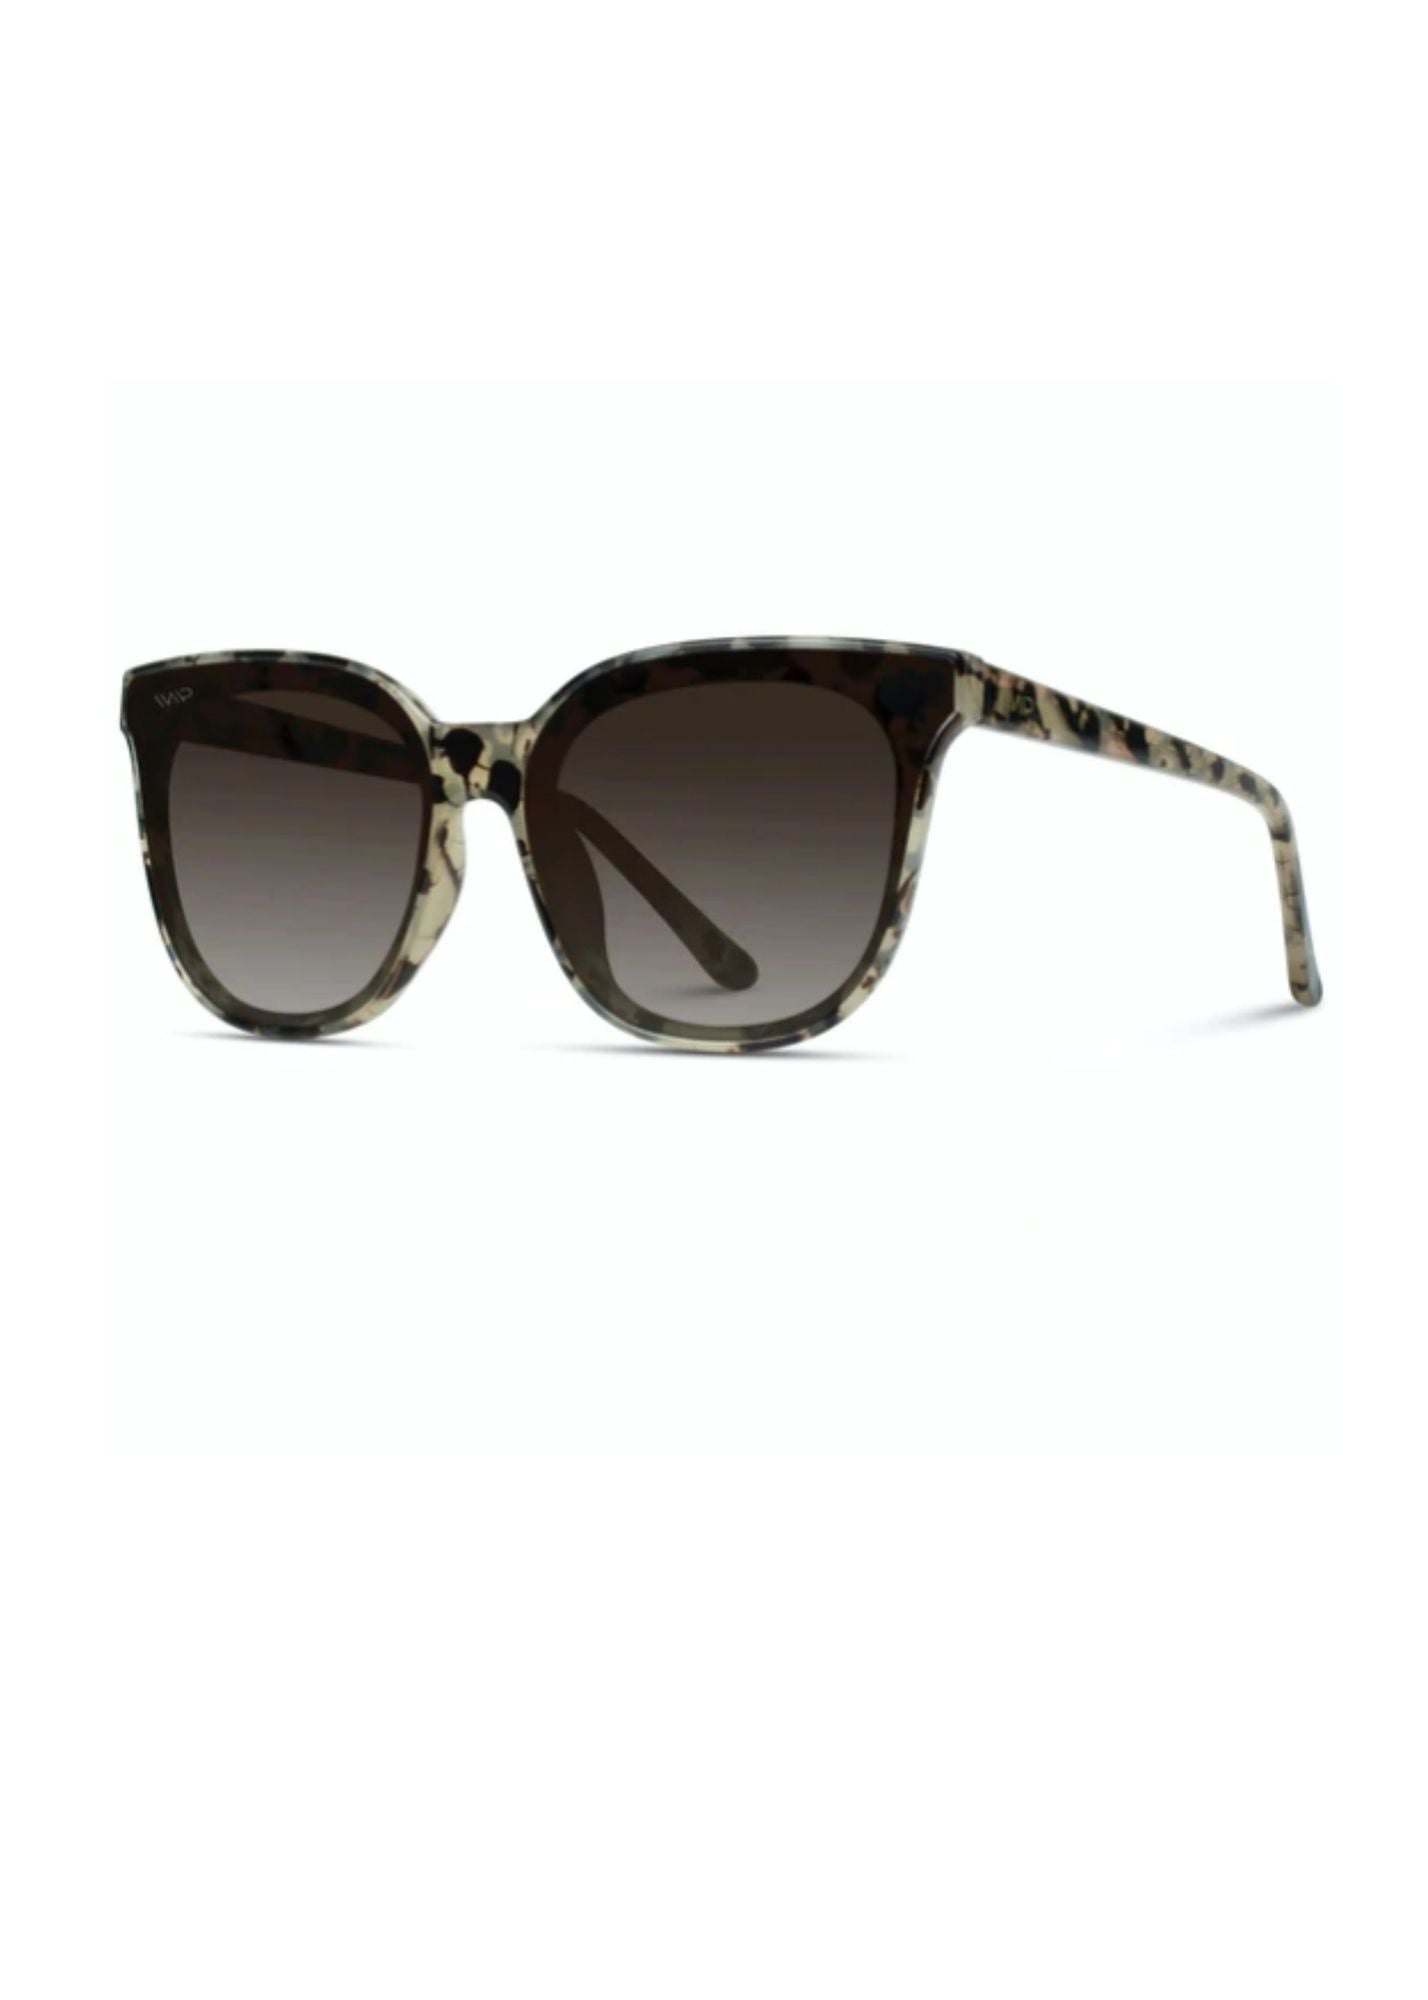 Lucy Cream Frame Sunglasses Accessories WearMe Pro